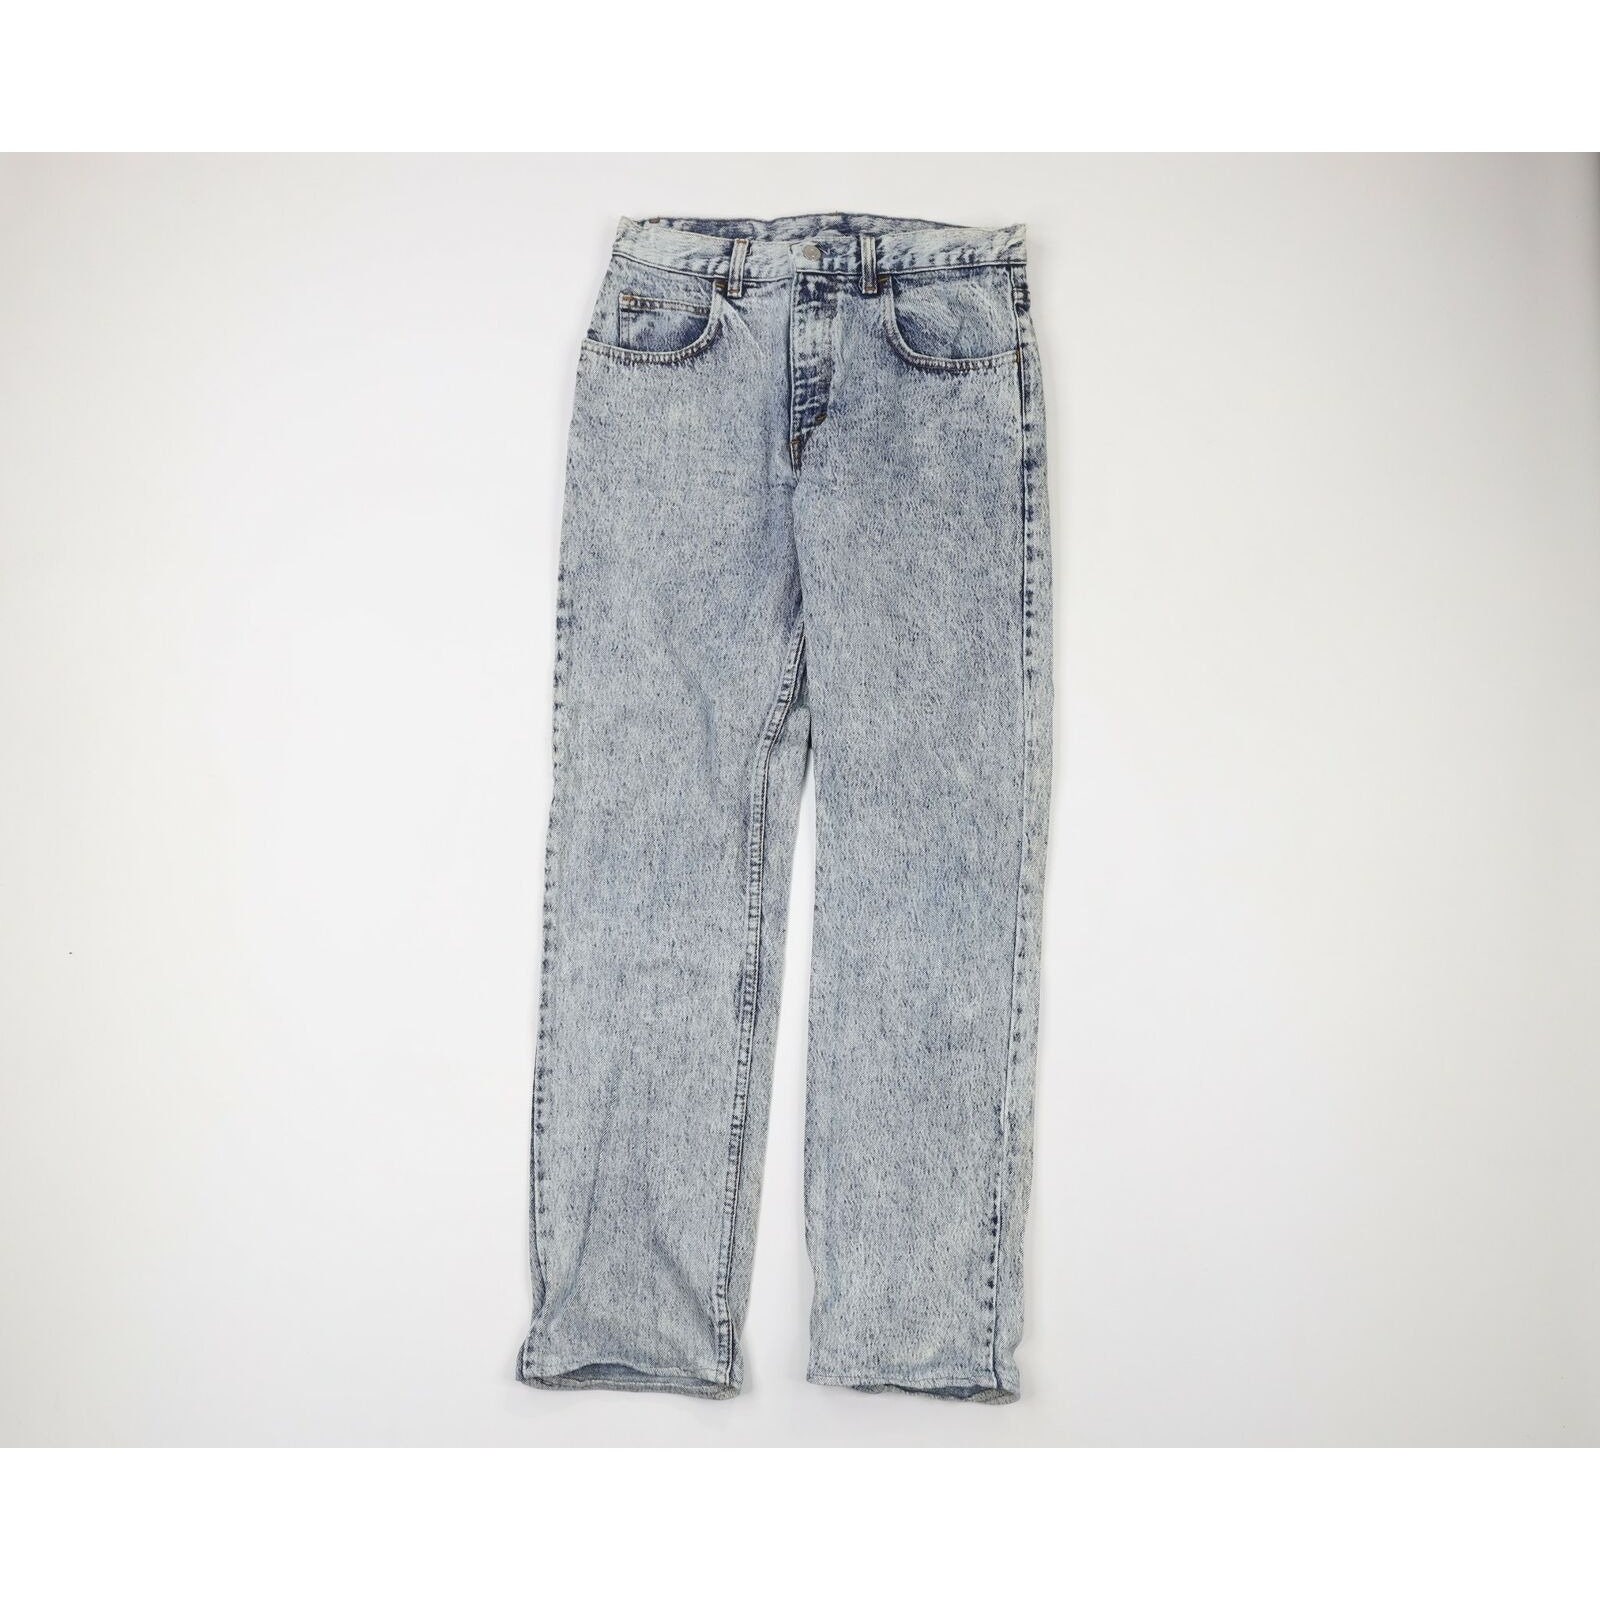 1980s Gap Jeans 